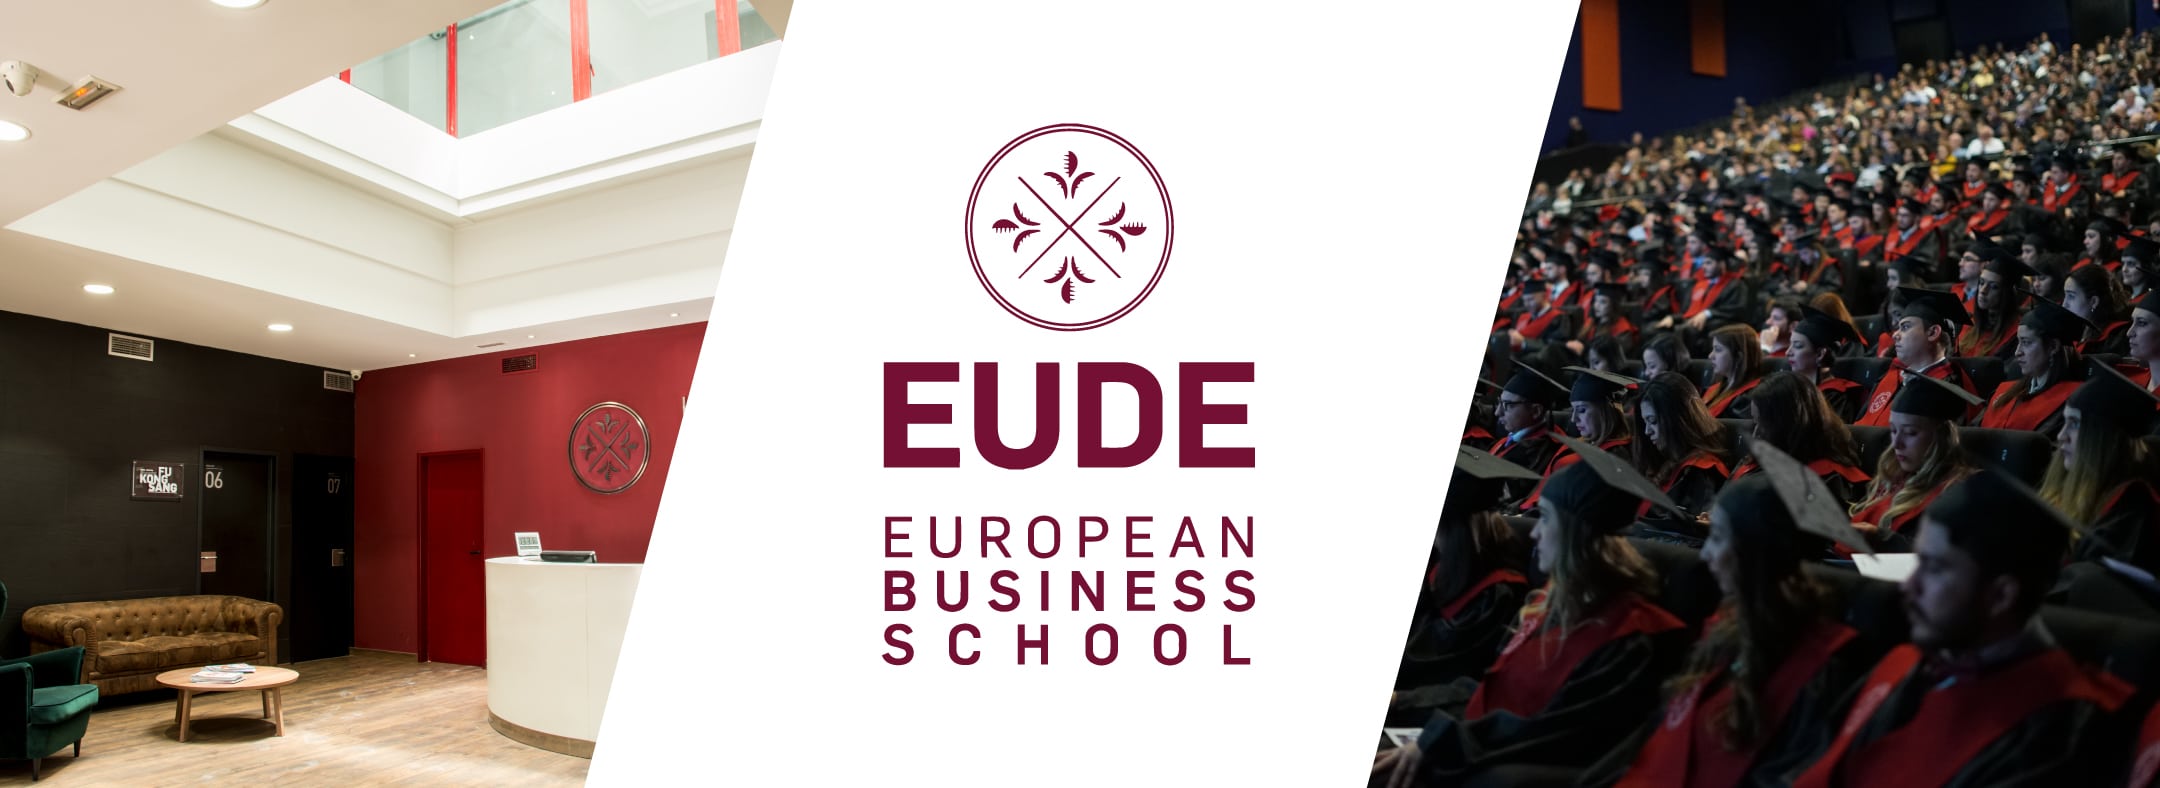 web-eude-european-business-school-citylife-madrid